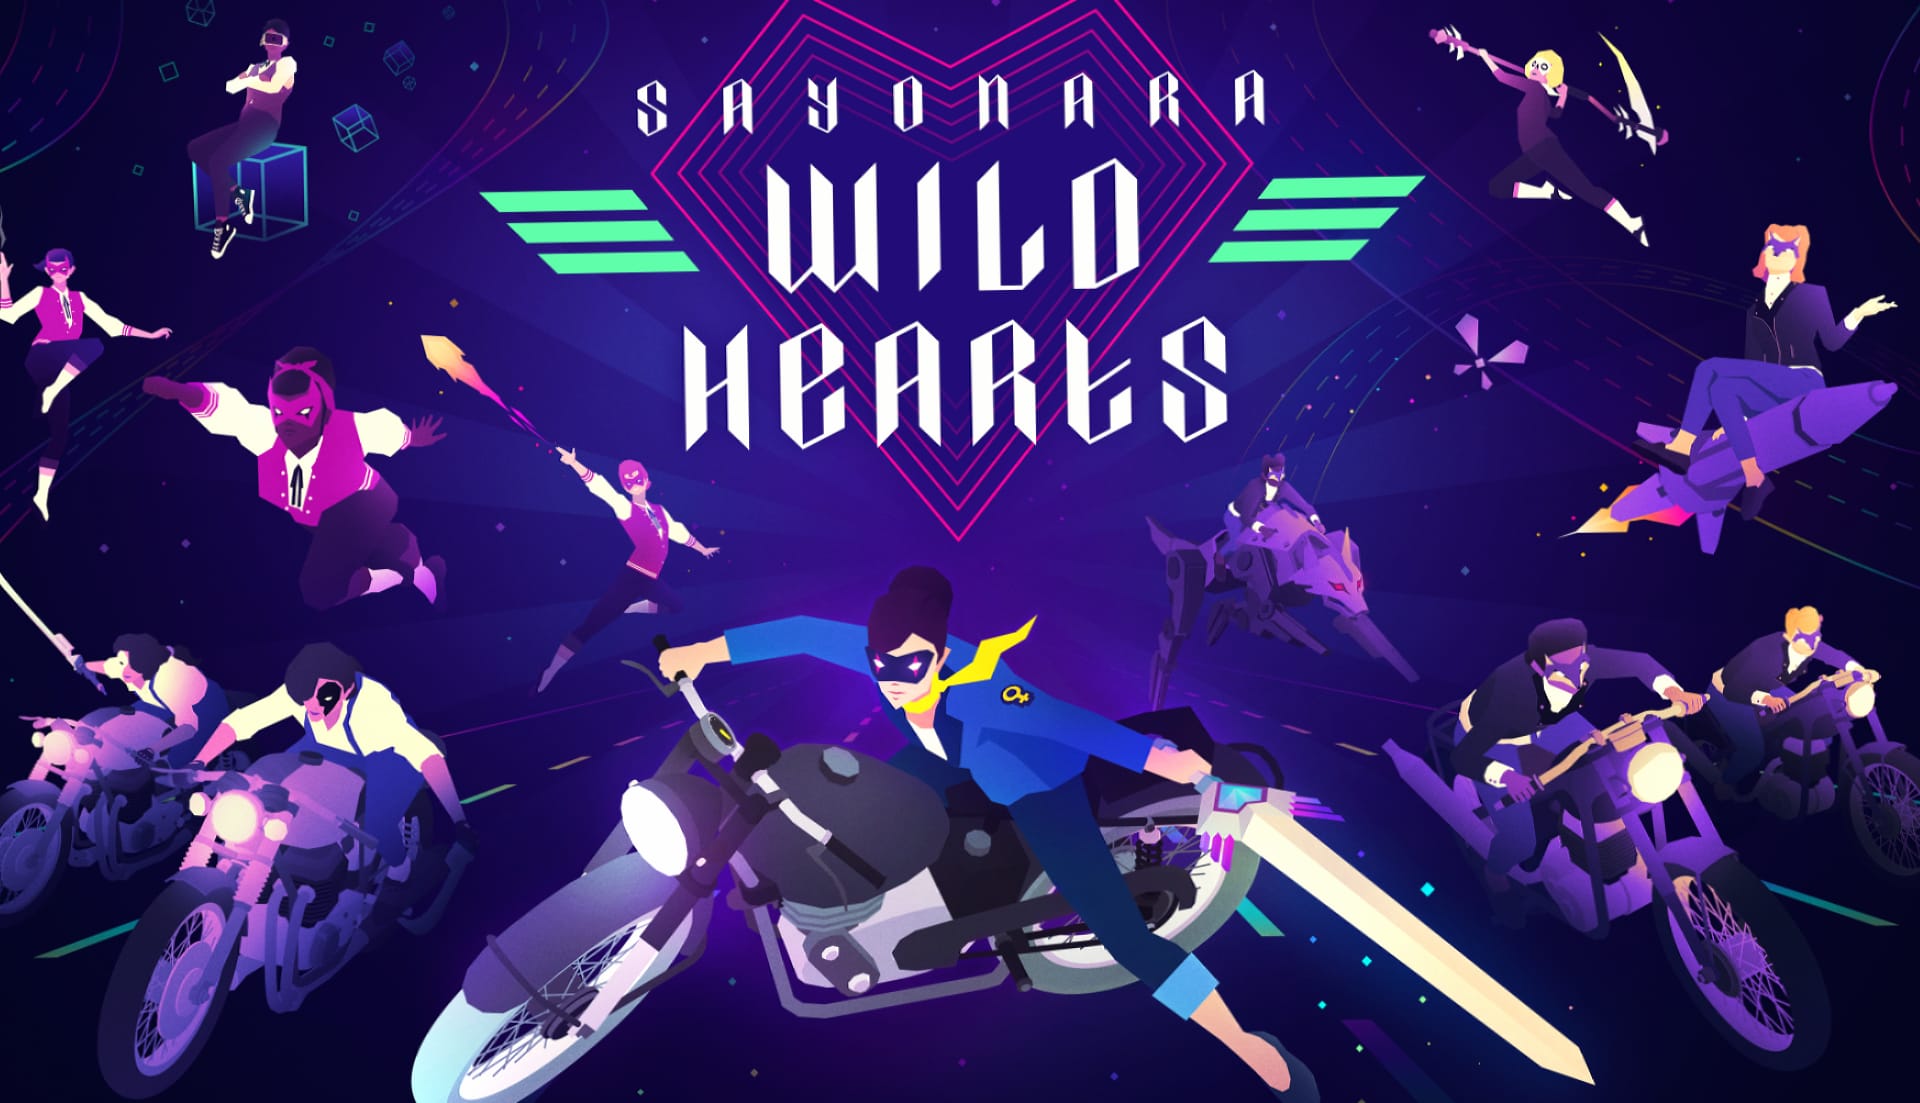 Sayonara Wild Hearts at 640 x 960 iPhone 4 size wallpapers HD quality